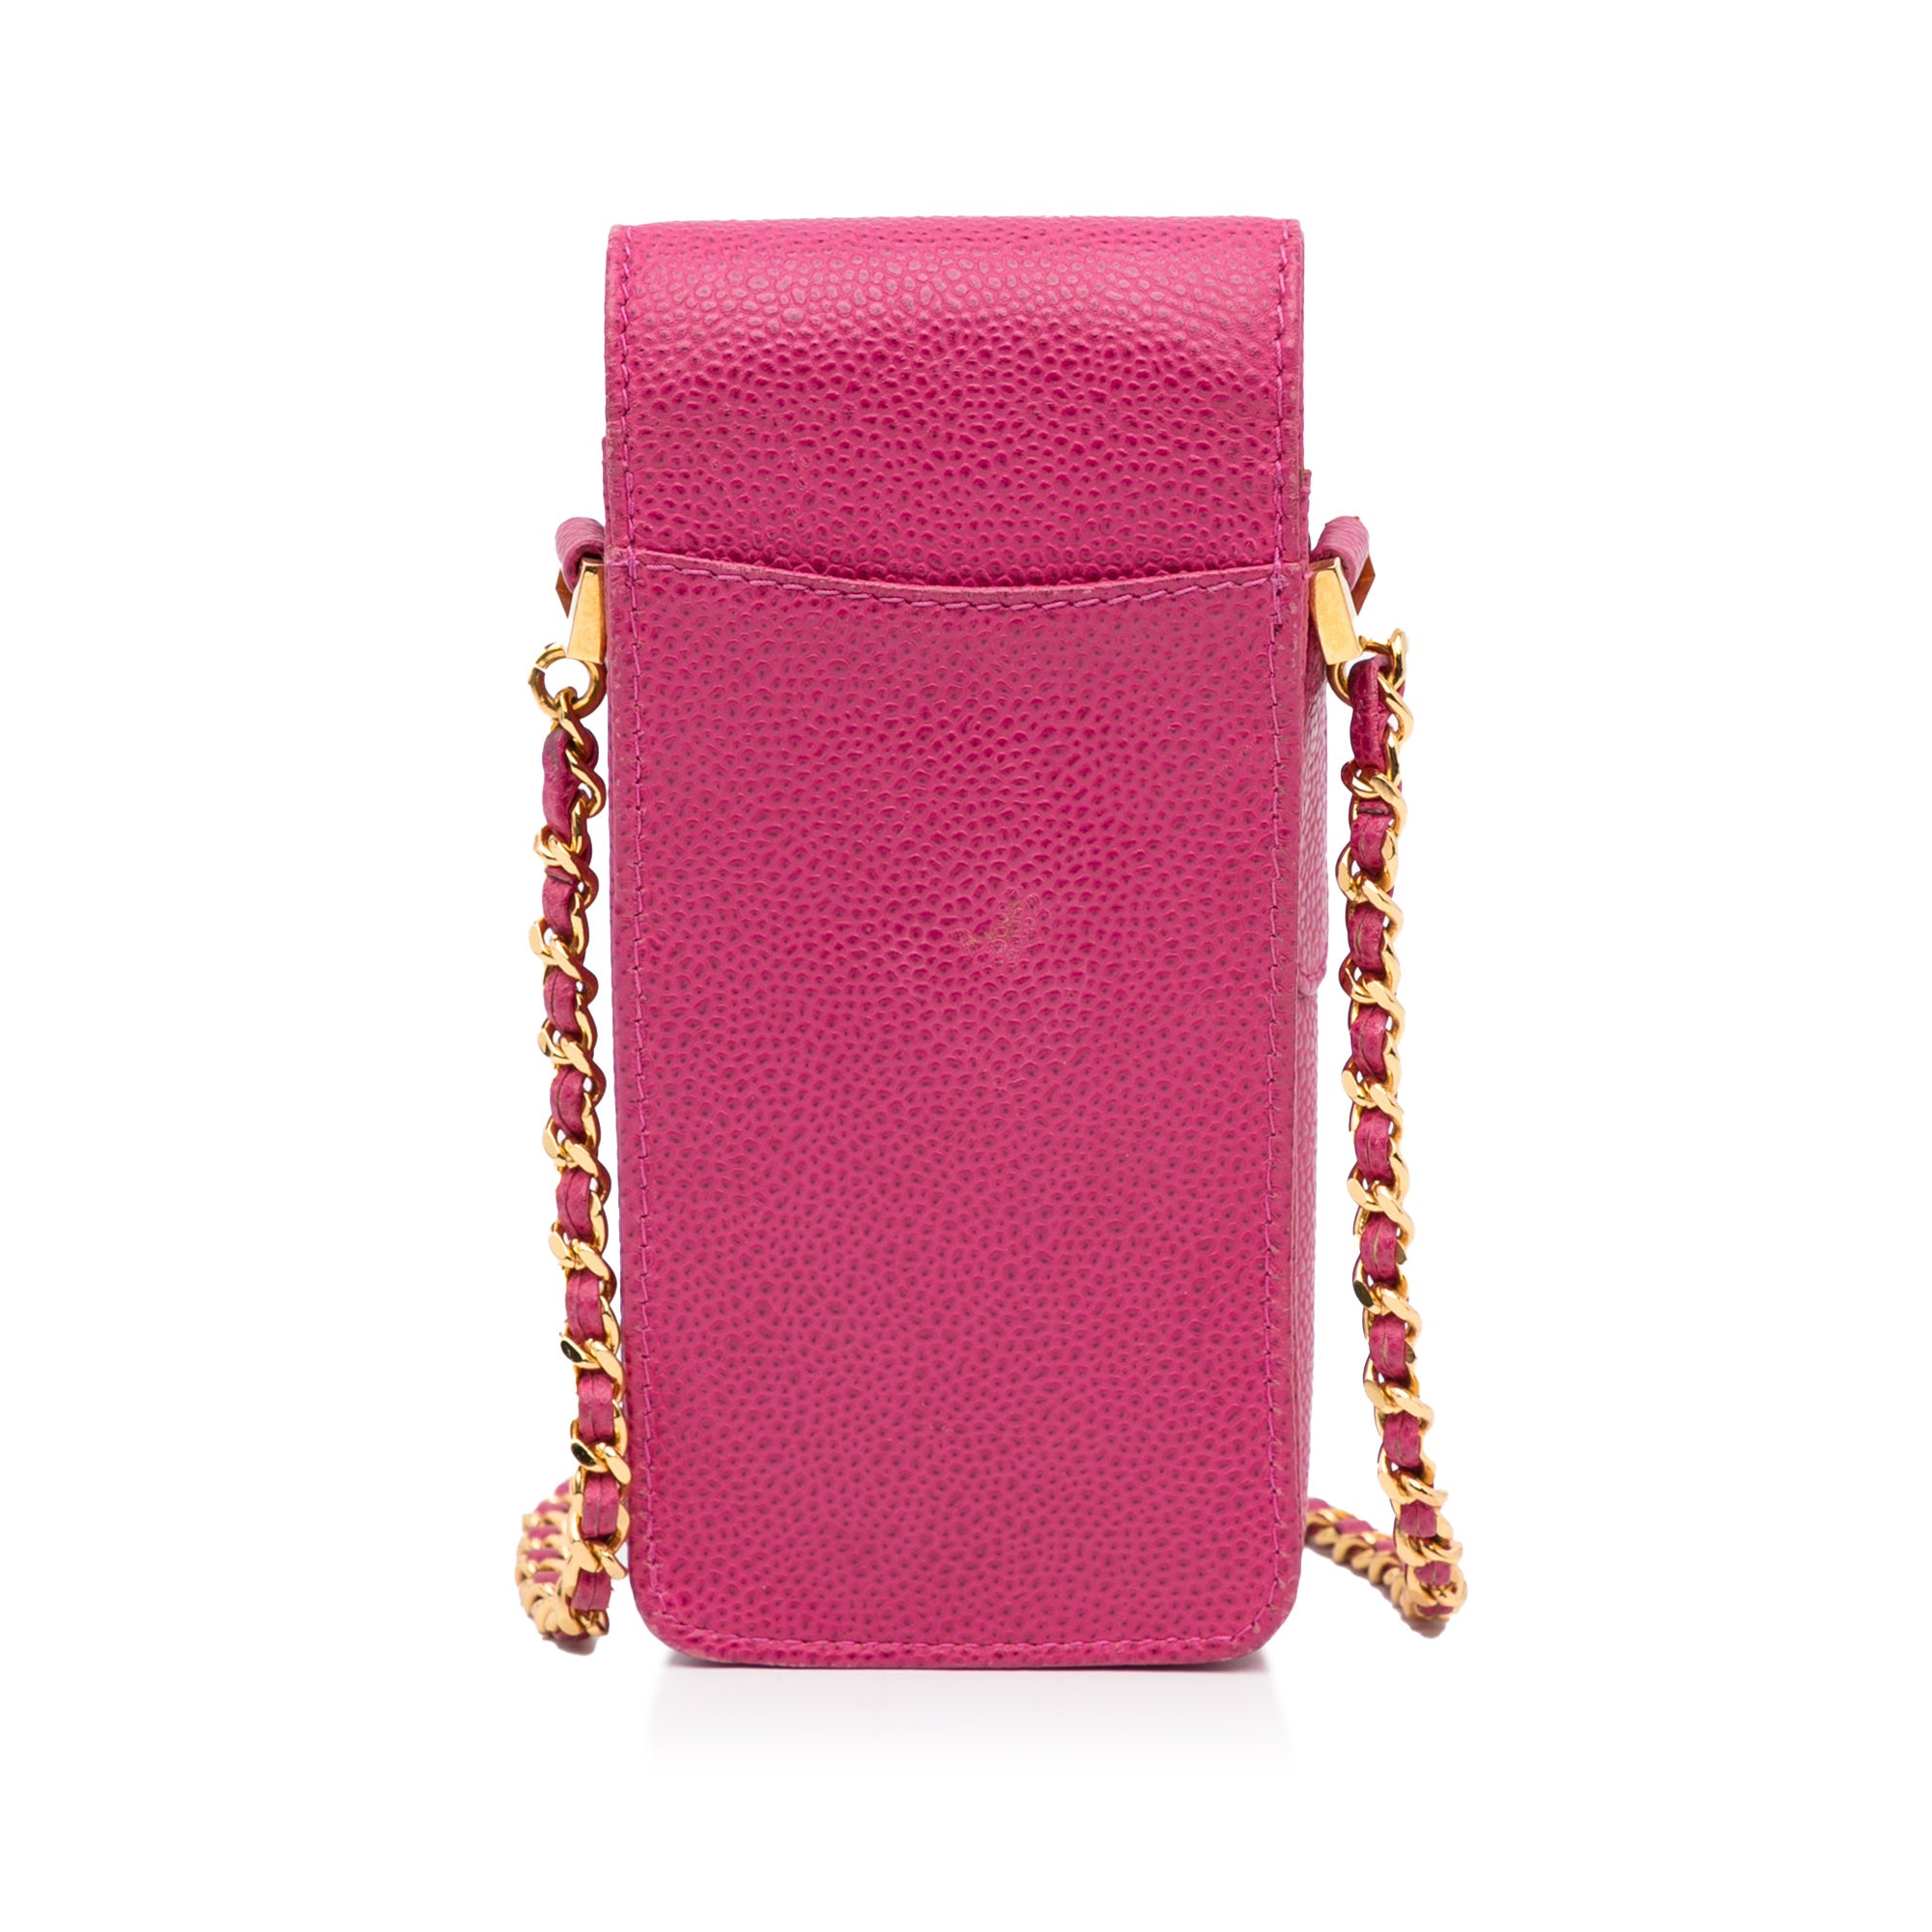 Pink Chanel CC Caviar Phone Crossbody Bag